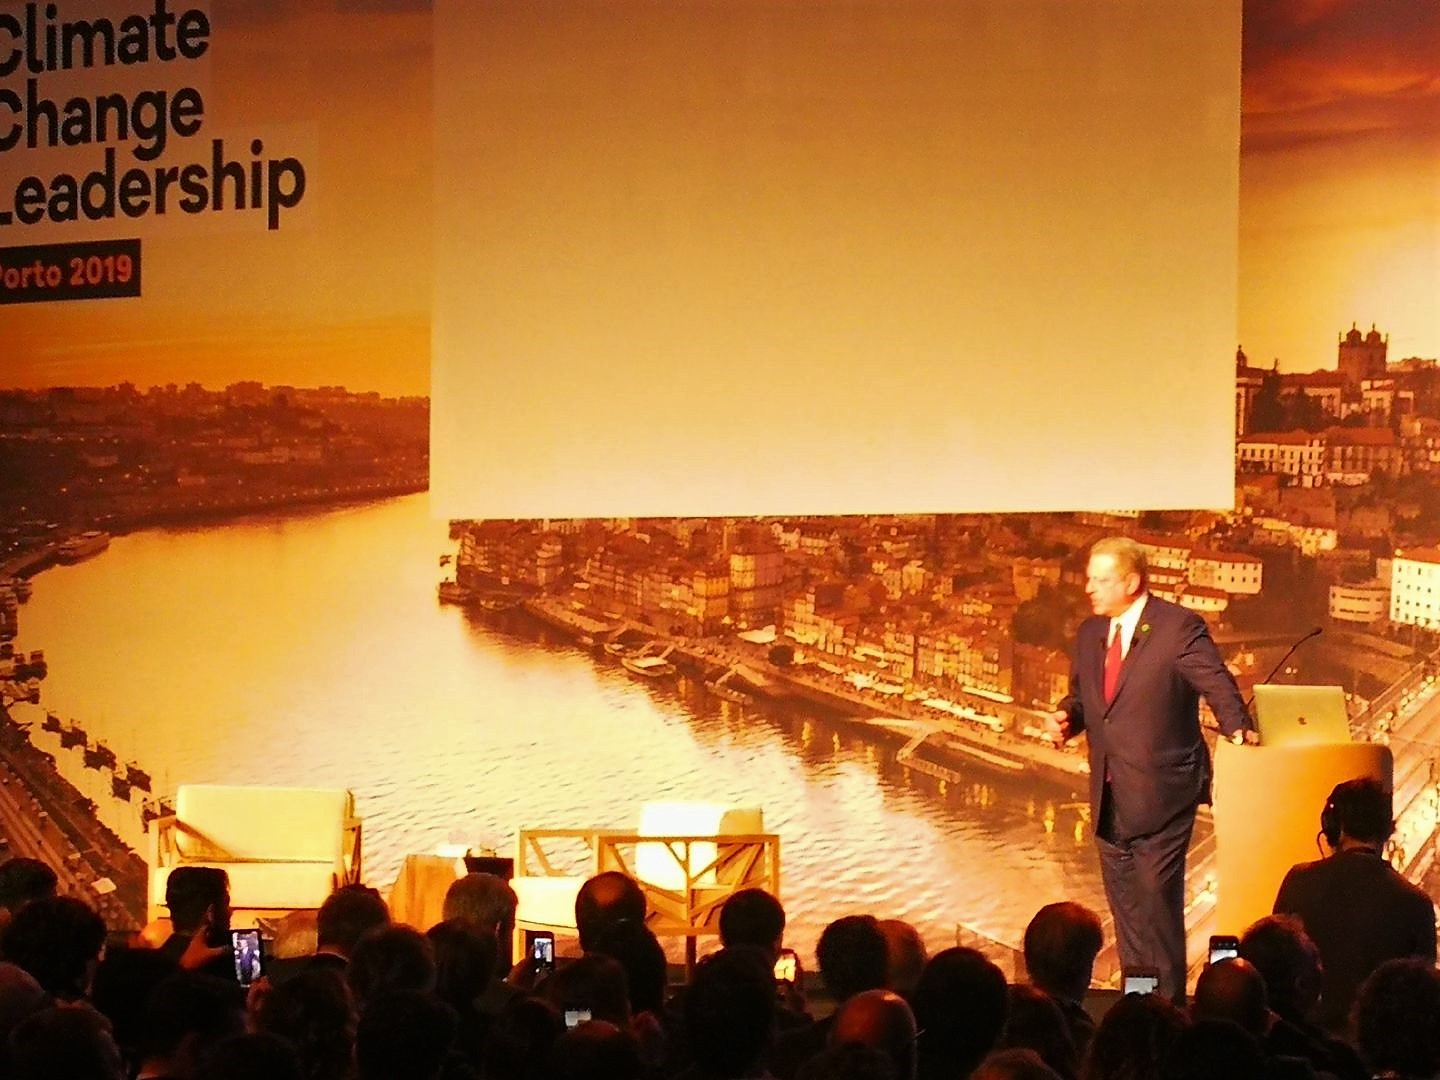 Climate Change Leadership Konferenz mit Al Gore